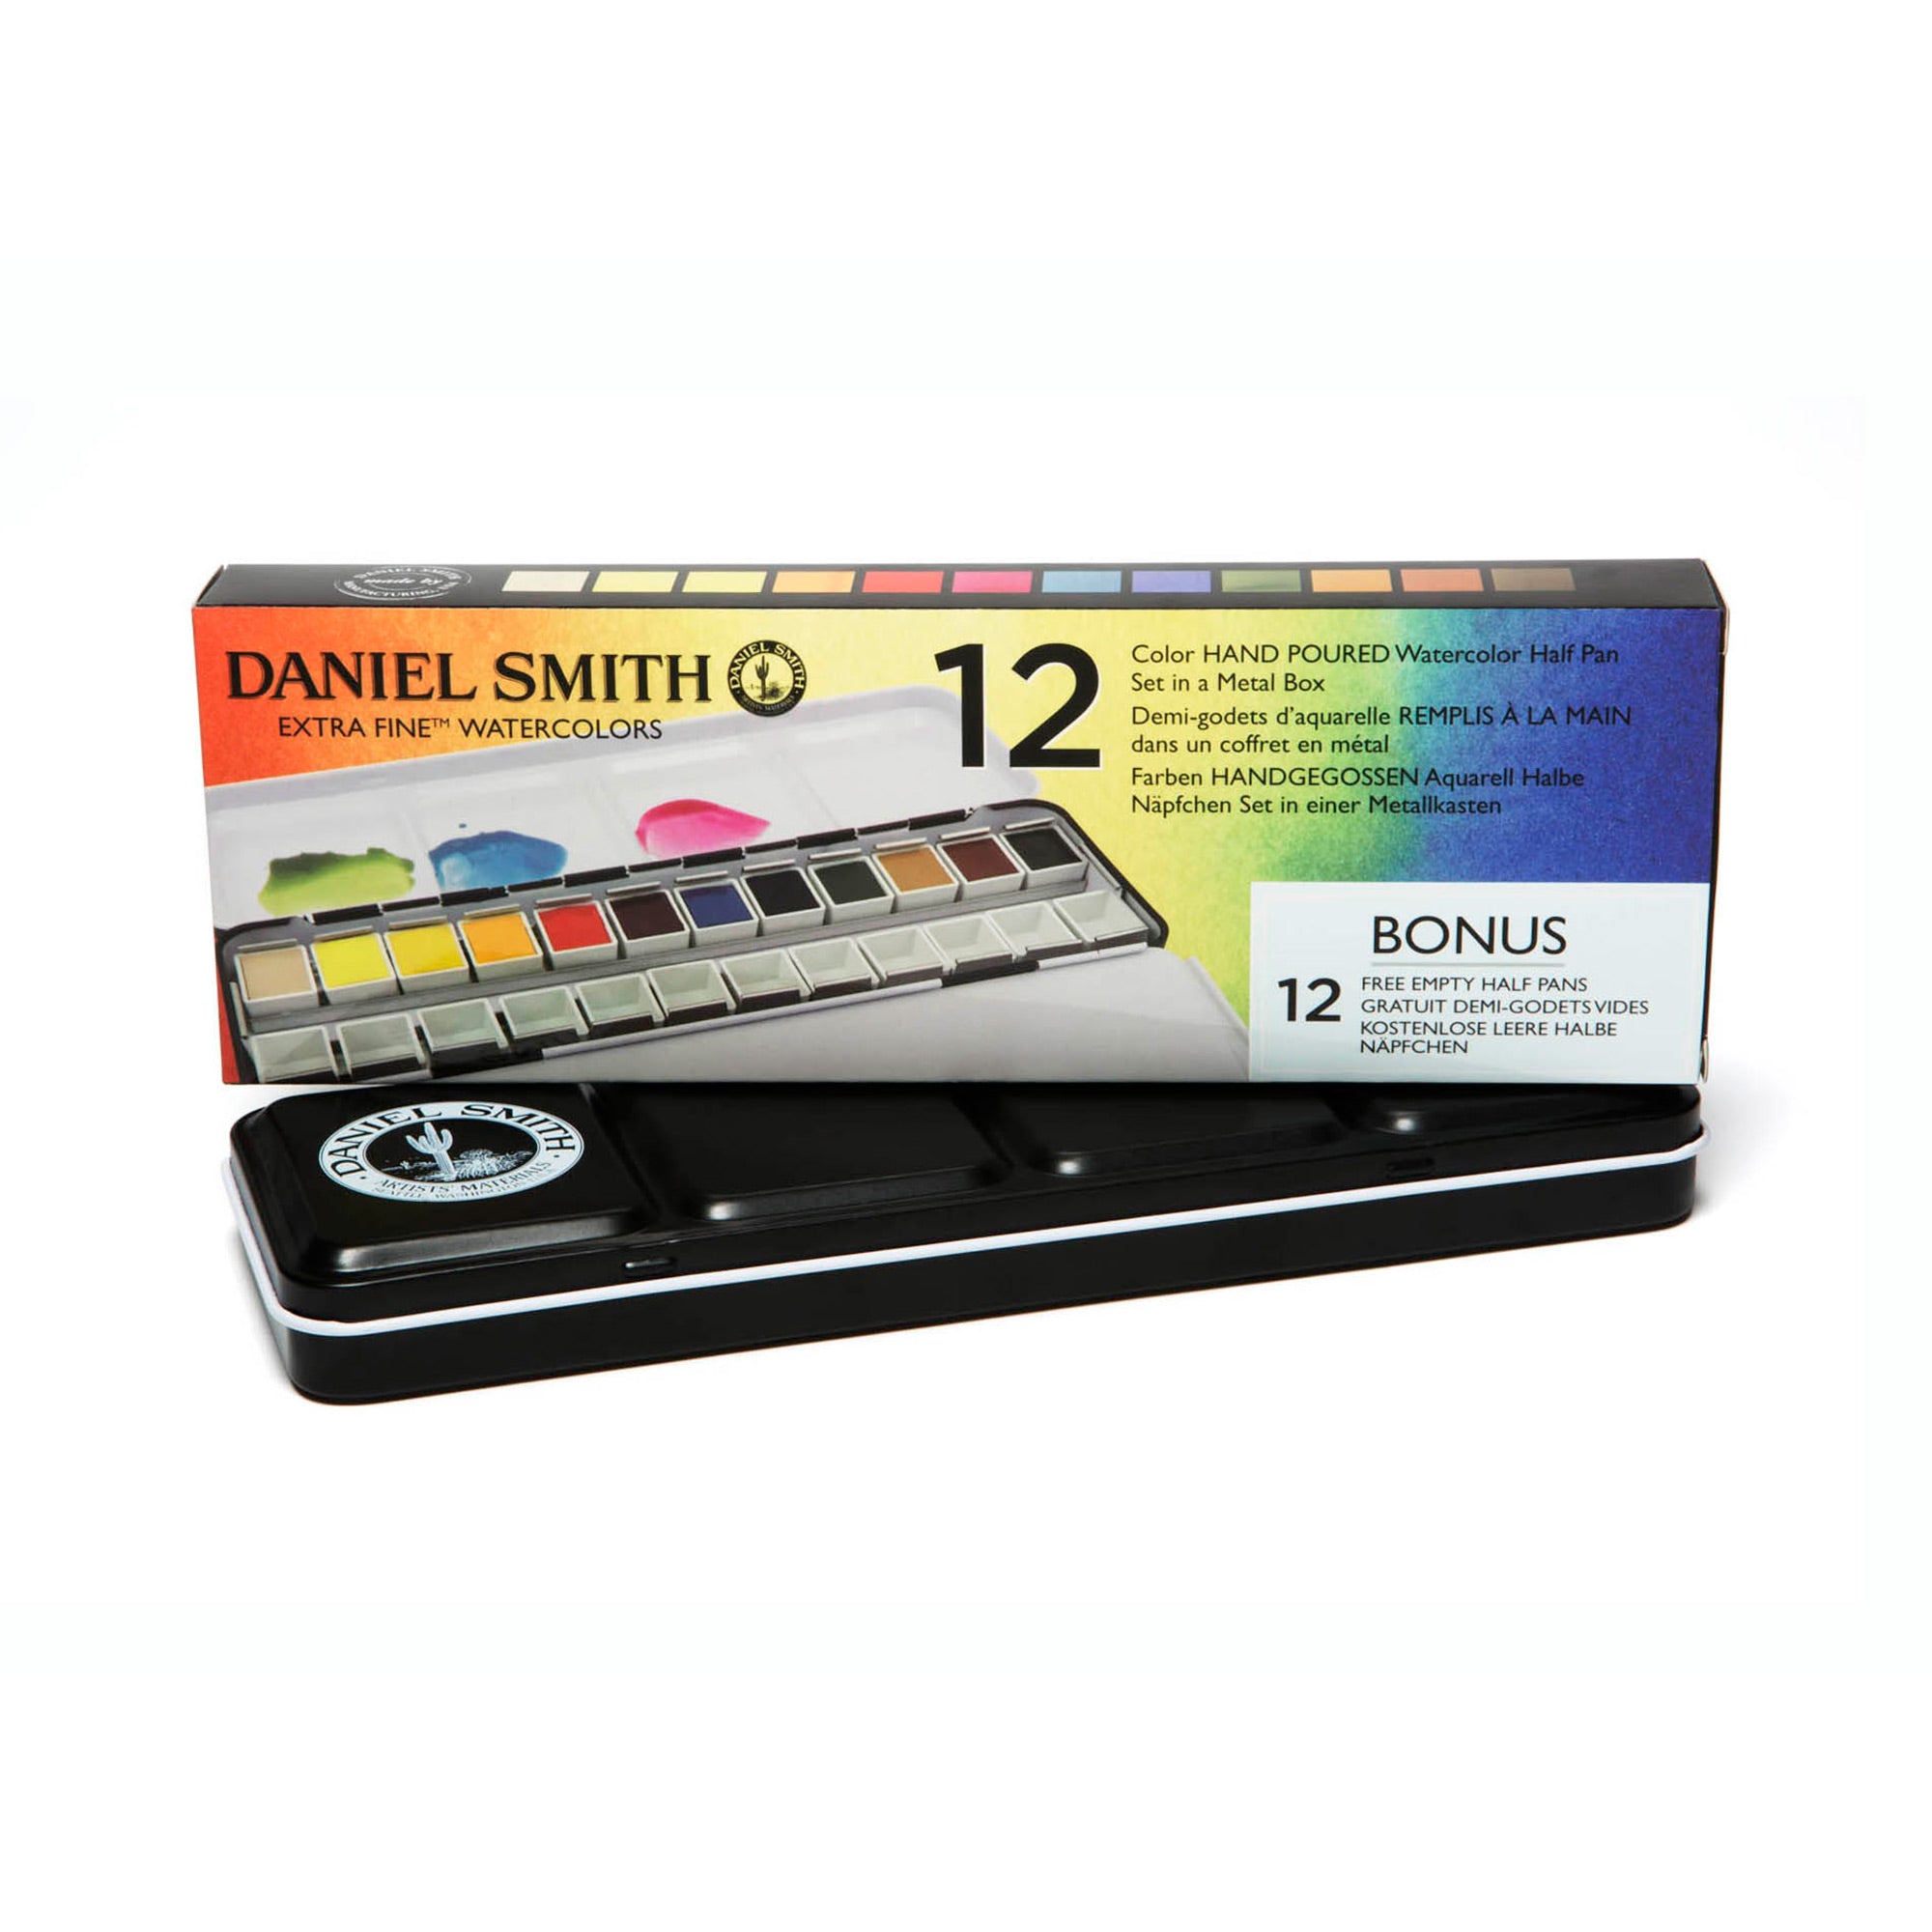 Daniel Smith Watercolor Ground 4oz Transparent